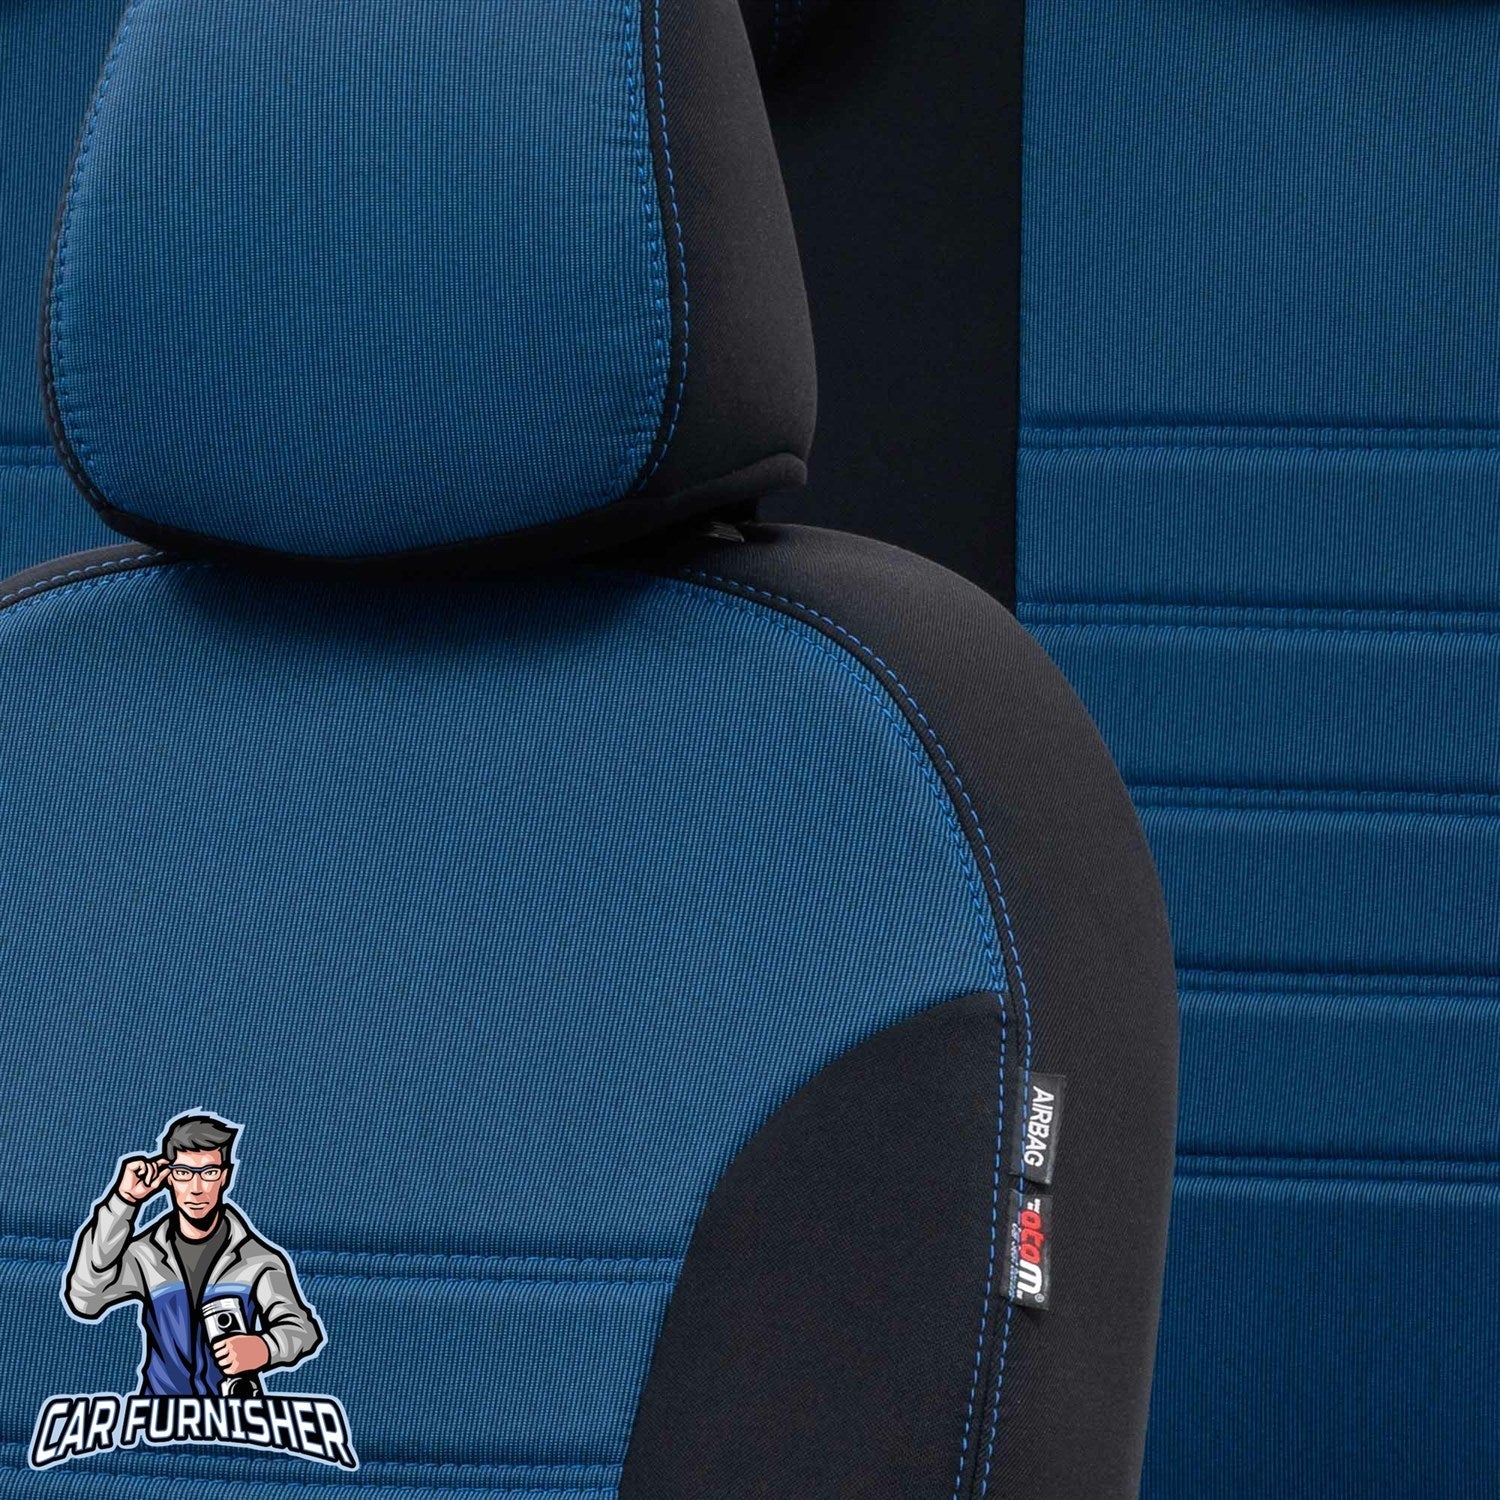 Toyota Yaris Seat Cover Original Jacquard Design Blue Jacquard Fabric